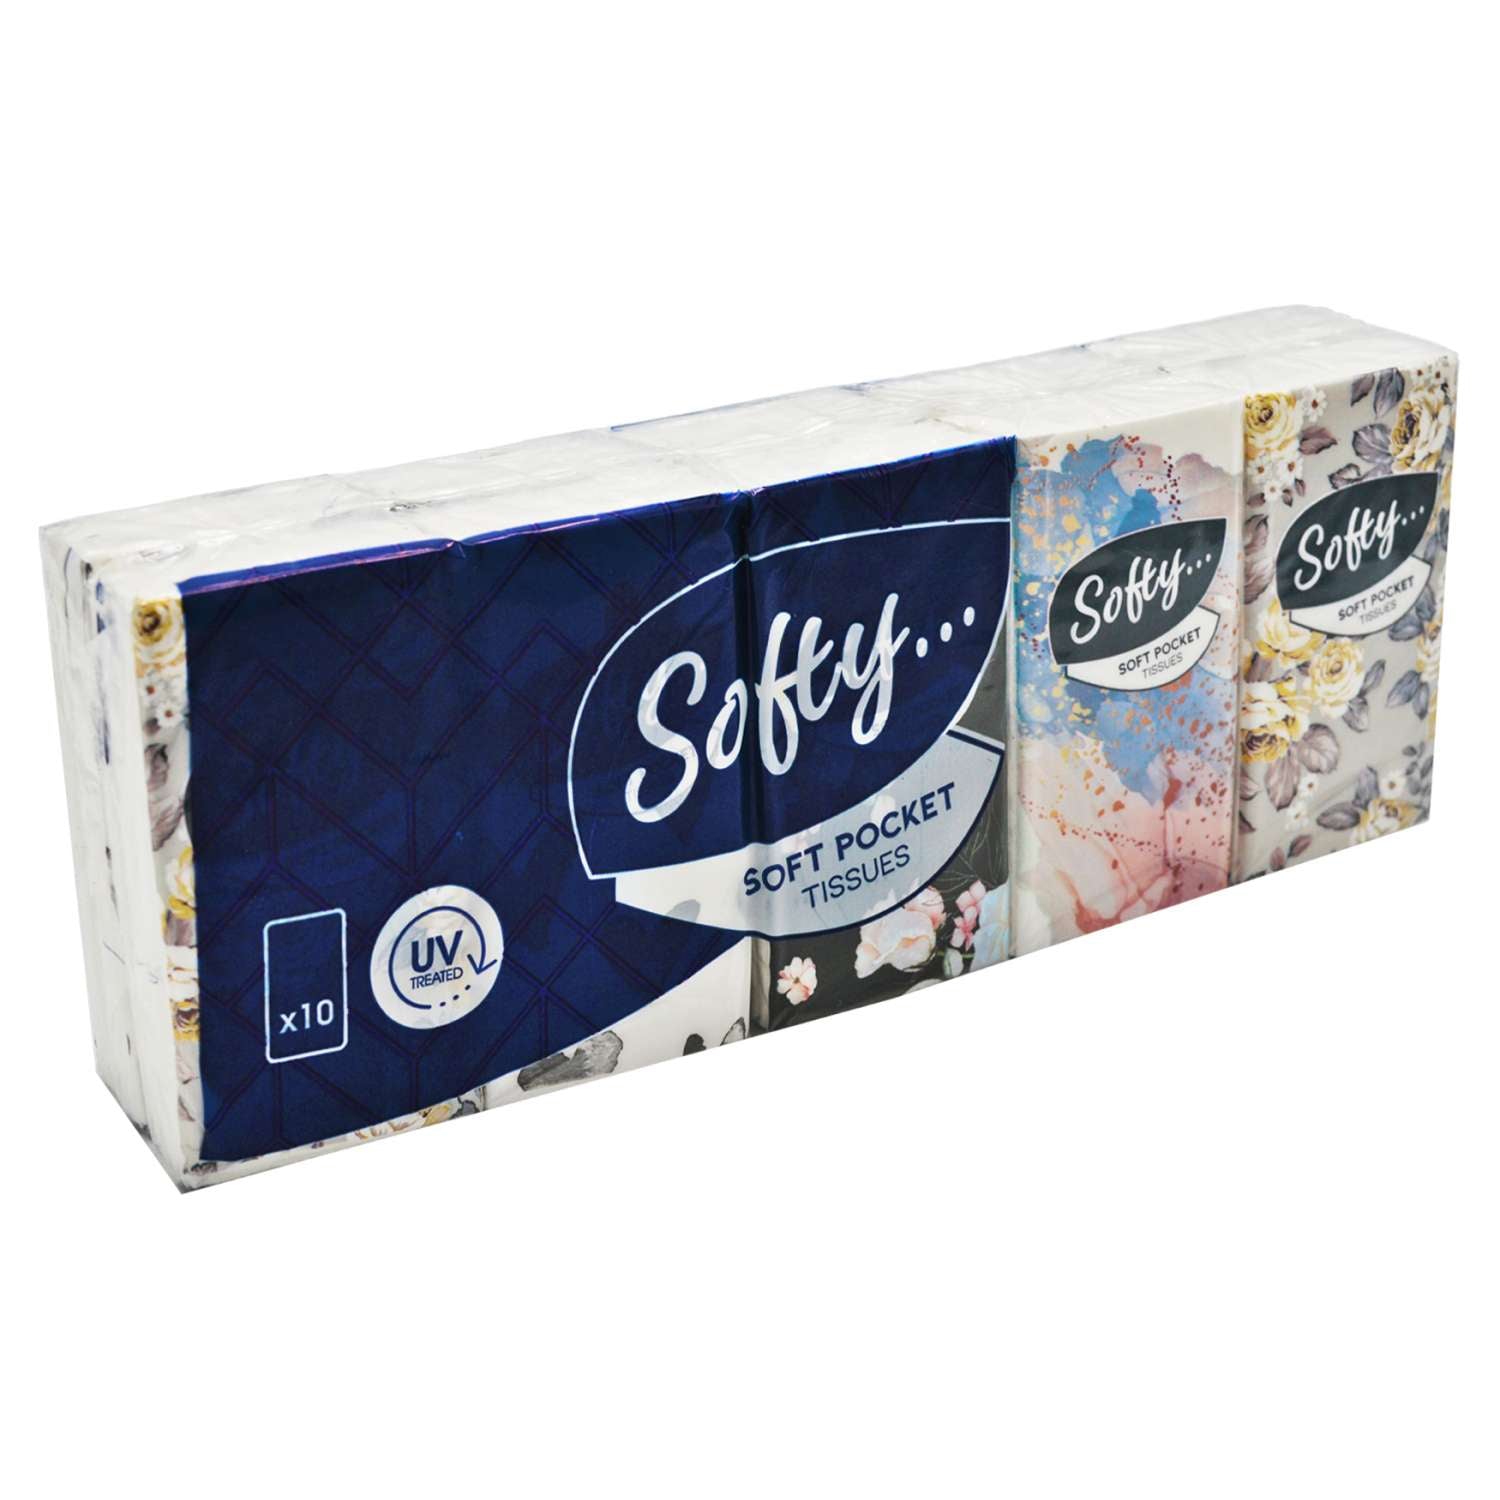 Softly Pocket Pack Tissues 10 Pack